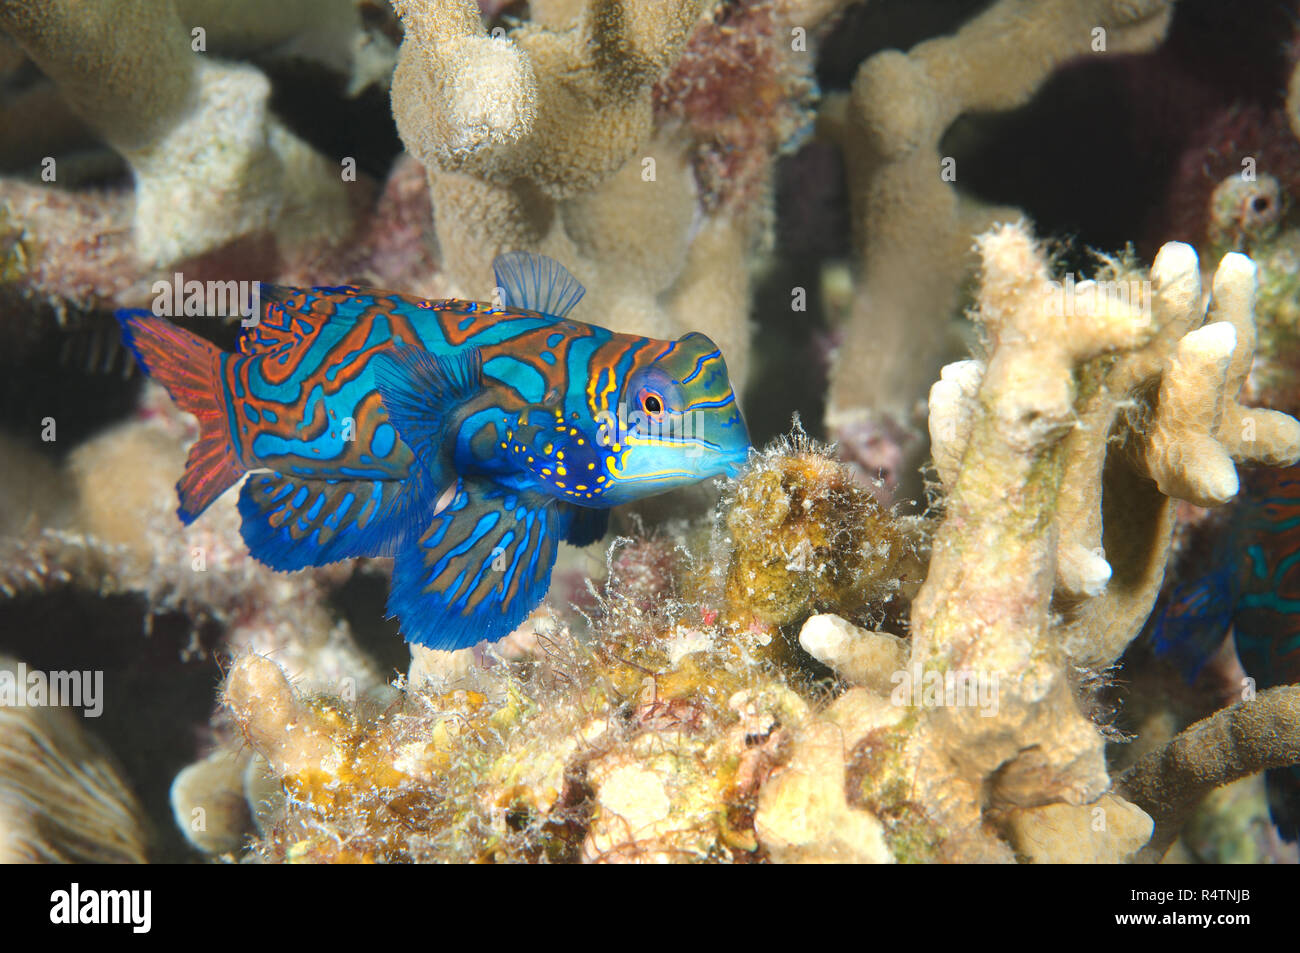 Mandarinfish (Synchiropus splendidus) on coral reef, Indo-Pacific Ocean, Philippines Stock Photo